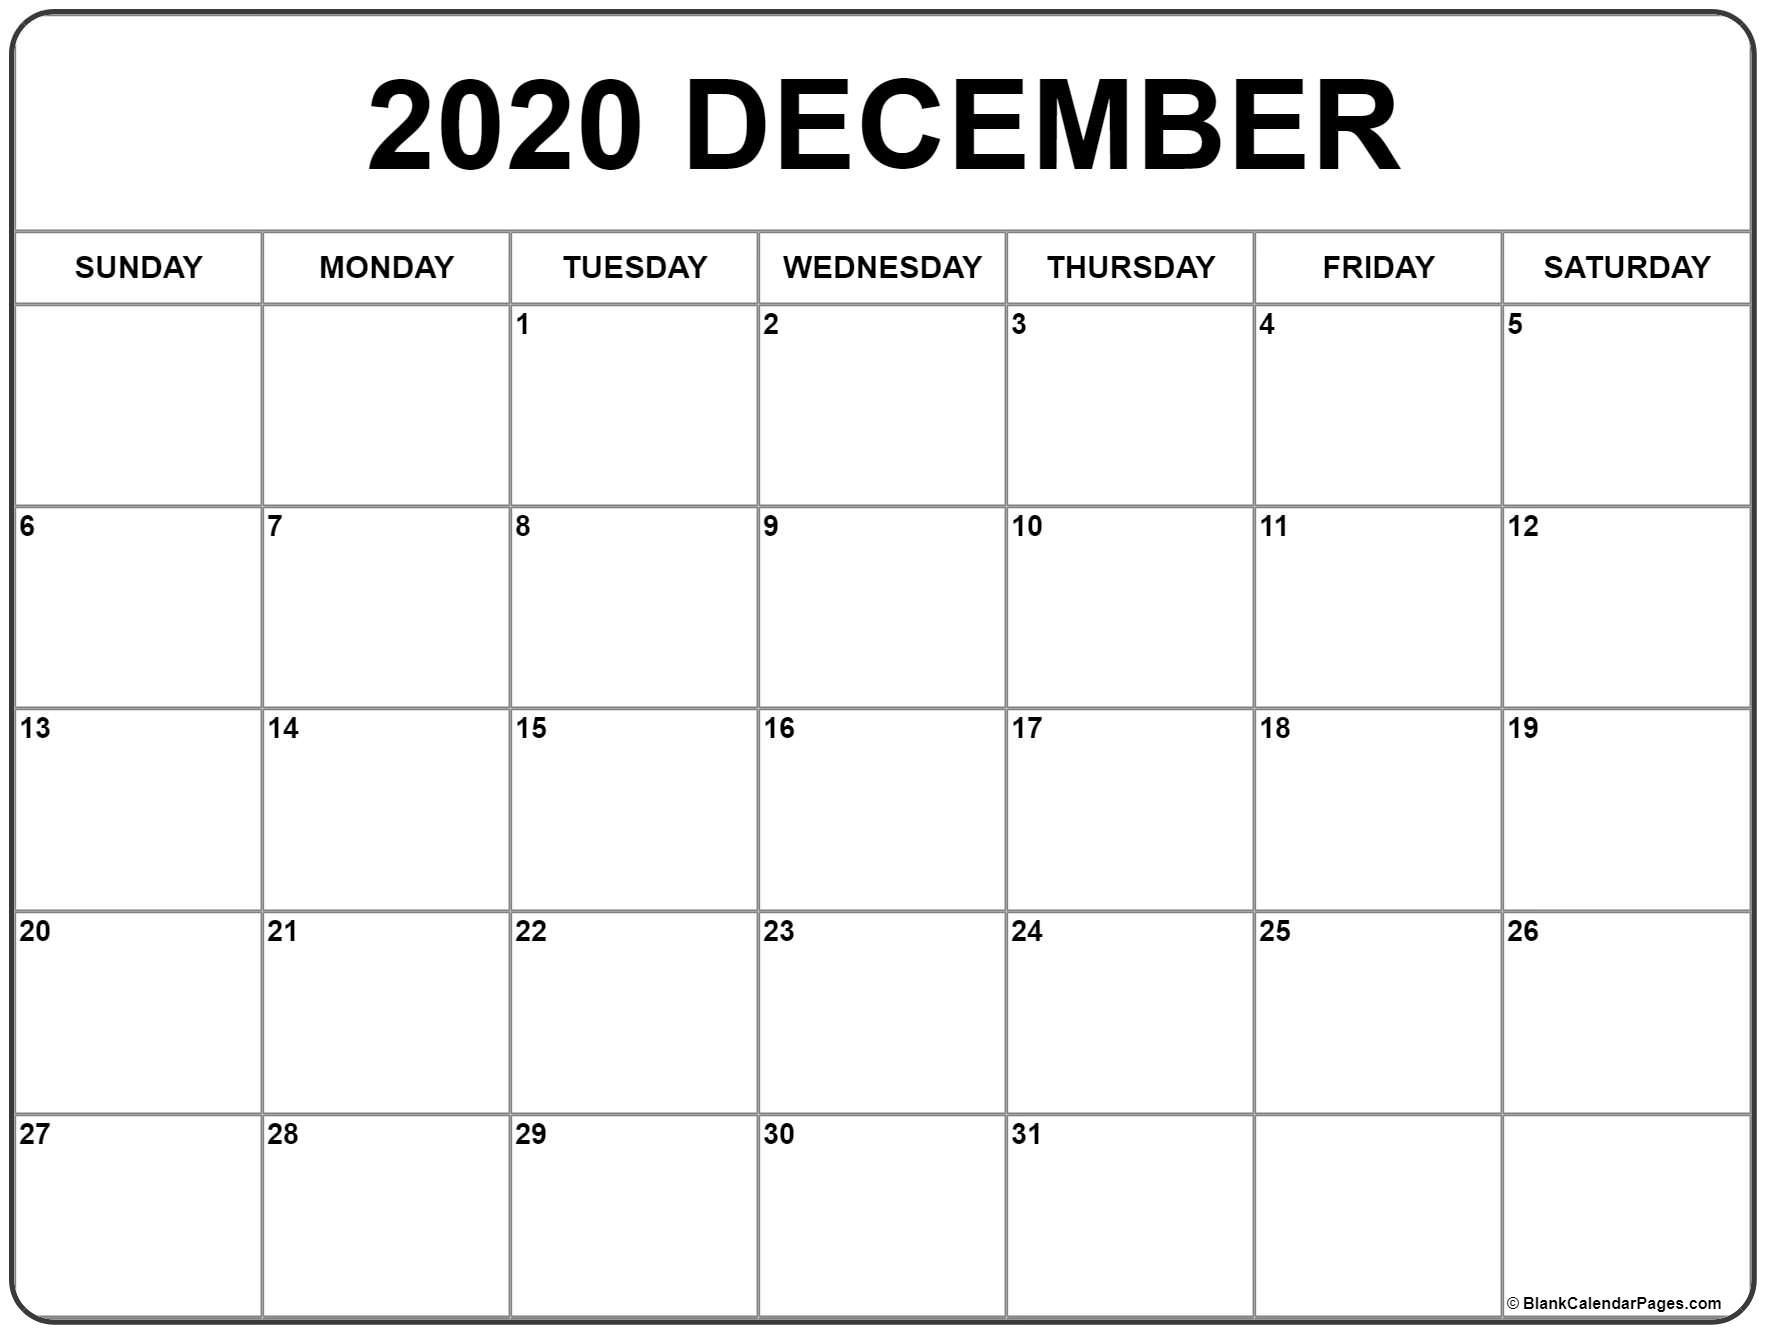 December 2020 Printable Calendar Template #2020Calendars-Blank Monthly Calendar Template 2020 Free